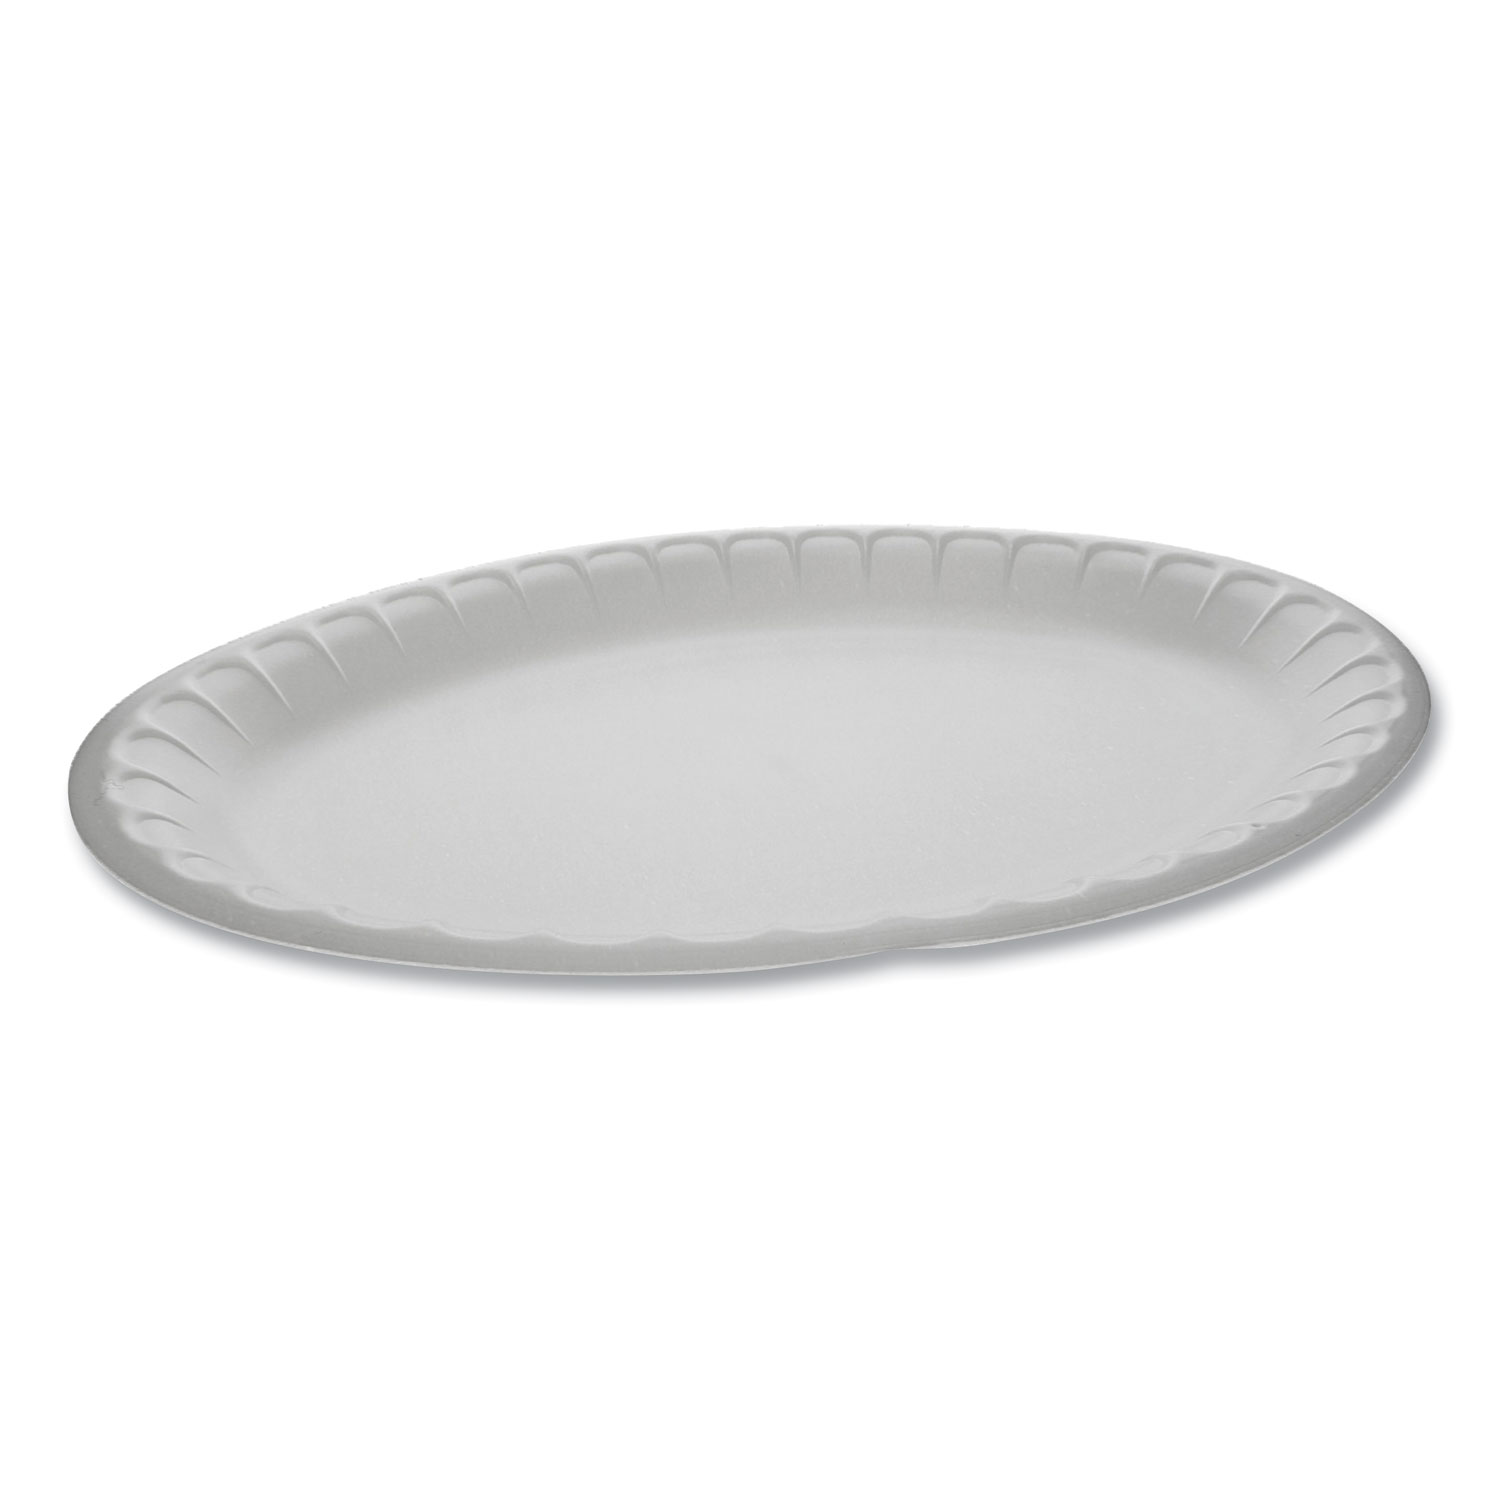  Pactiv YTH100430000 Unlaminated Foam Dinnerware, Platter, Oval, 11.5 x 8.5, White, 500/Carton (PCTYTH100430000) 